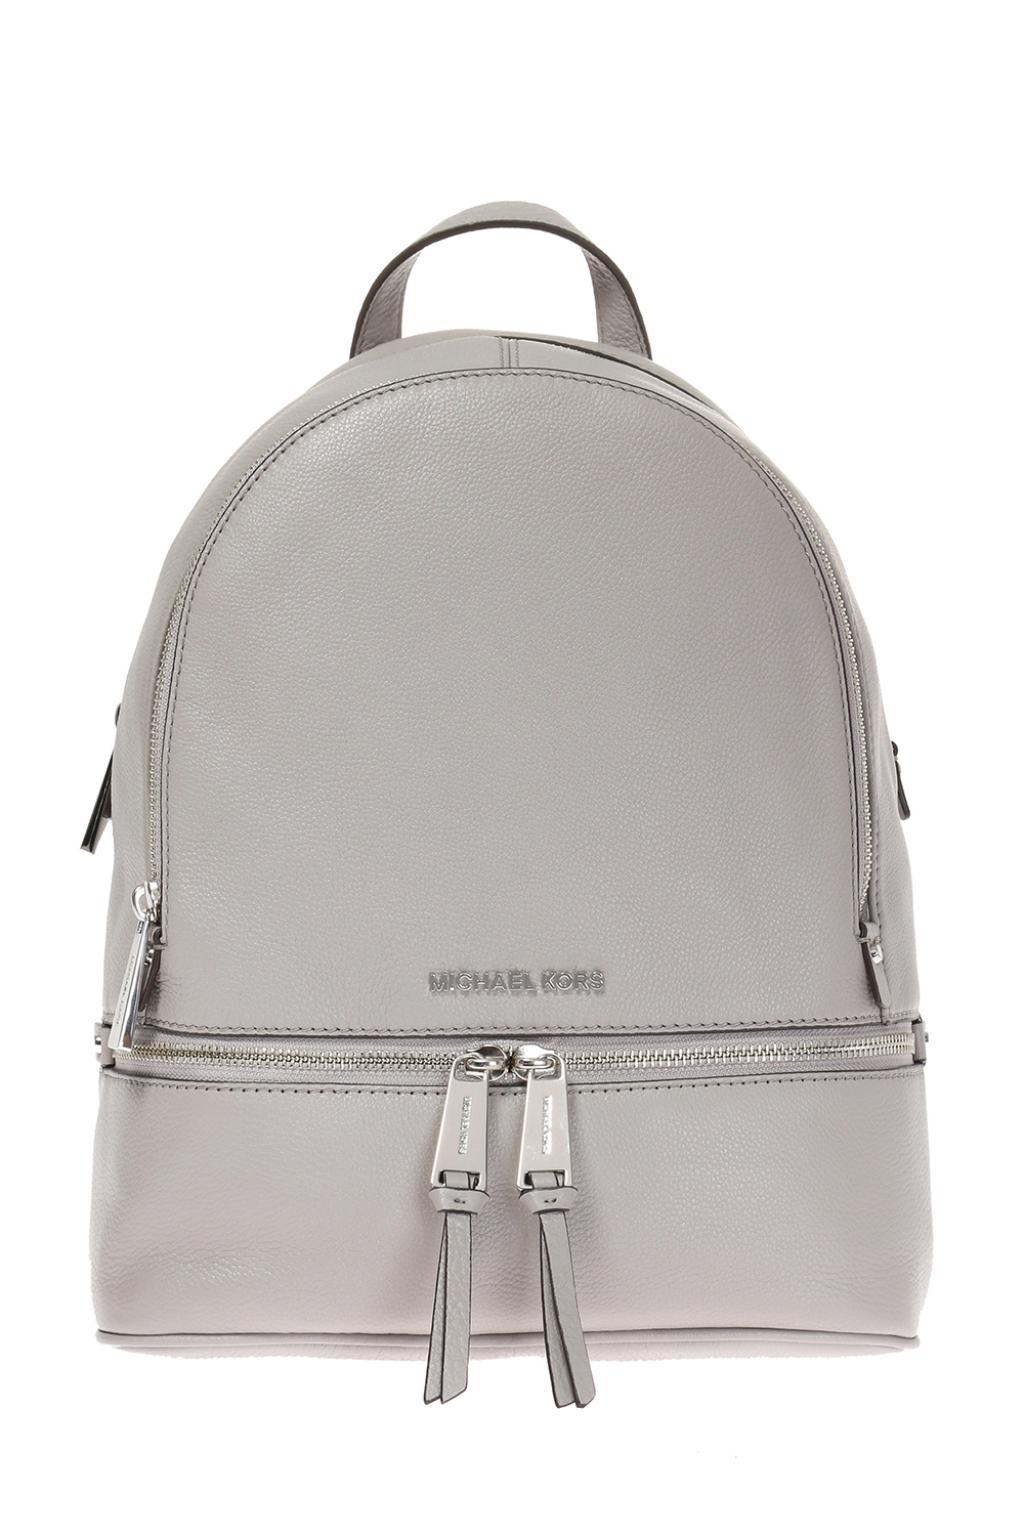 Michael Kors Rhea XS Perforated Backpack Pearl Grey titikakamining.pe